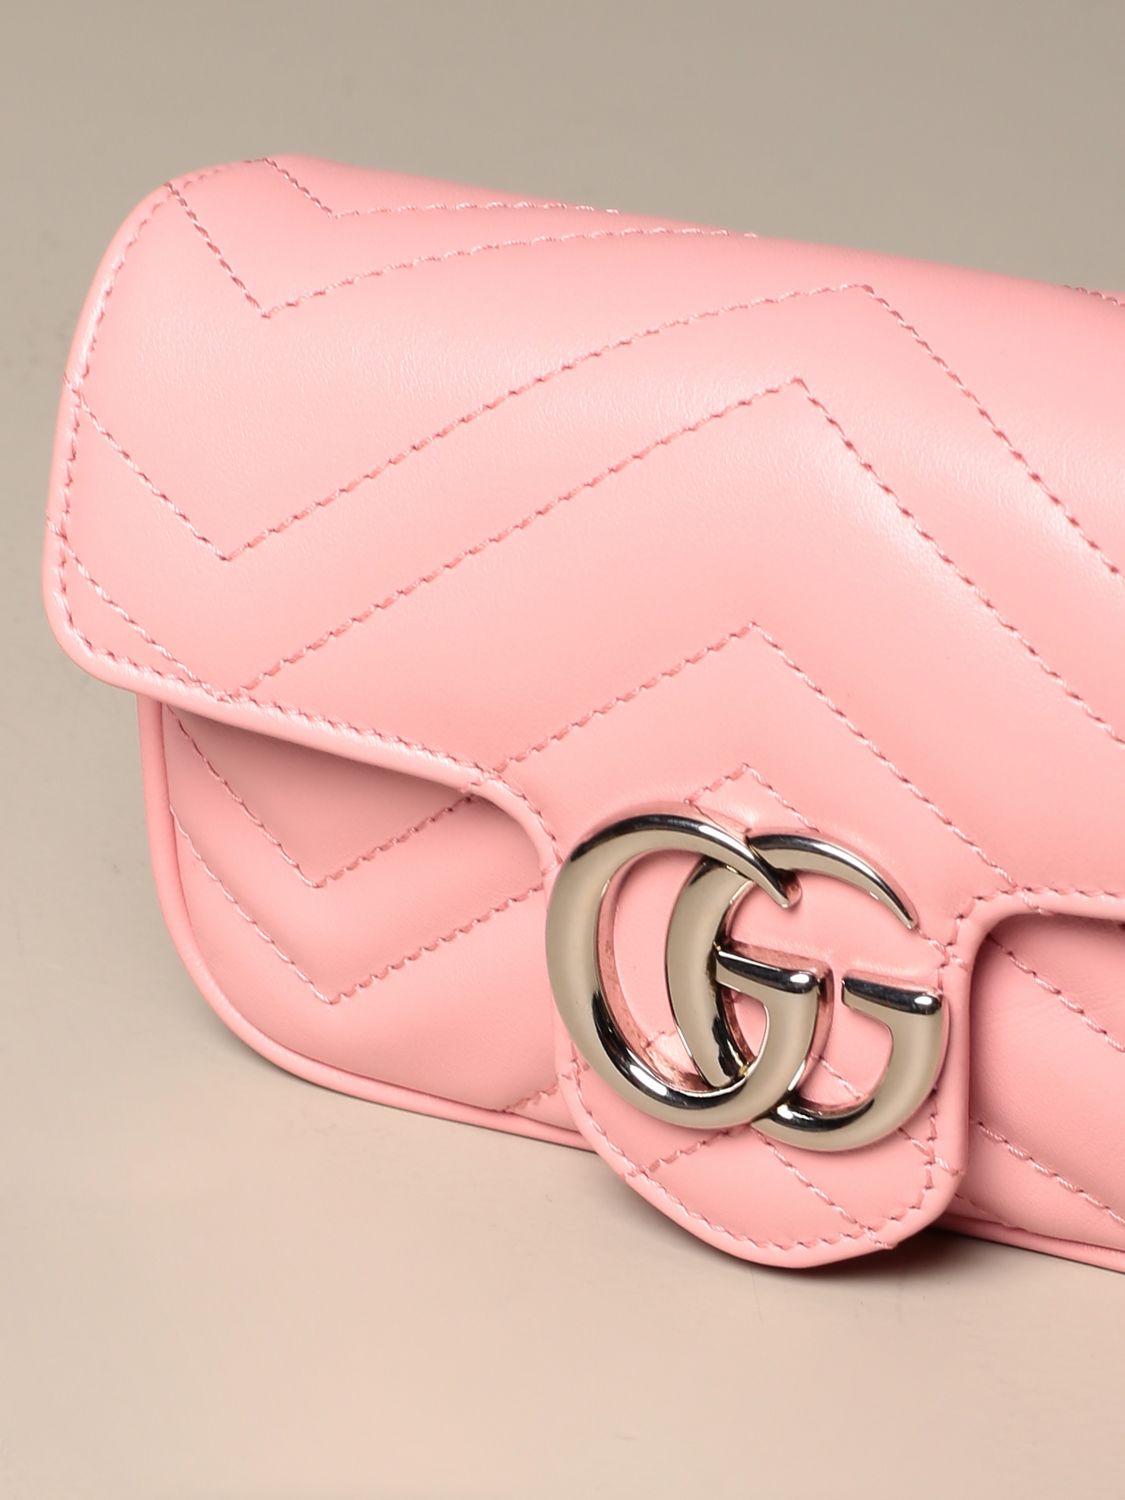 GUCCI GG Marmont Super Mini Shoulder Bag Leather Pink 476433 Purse 90180759